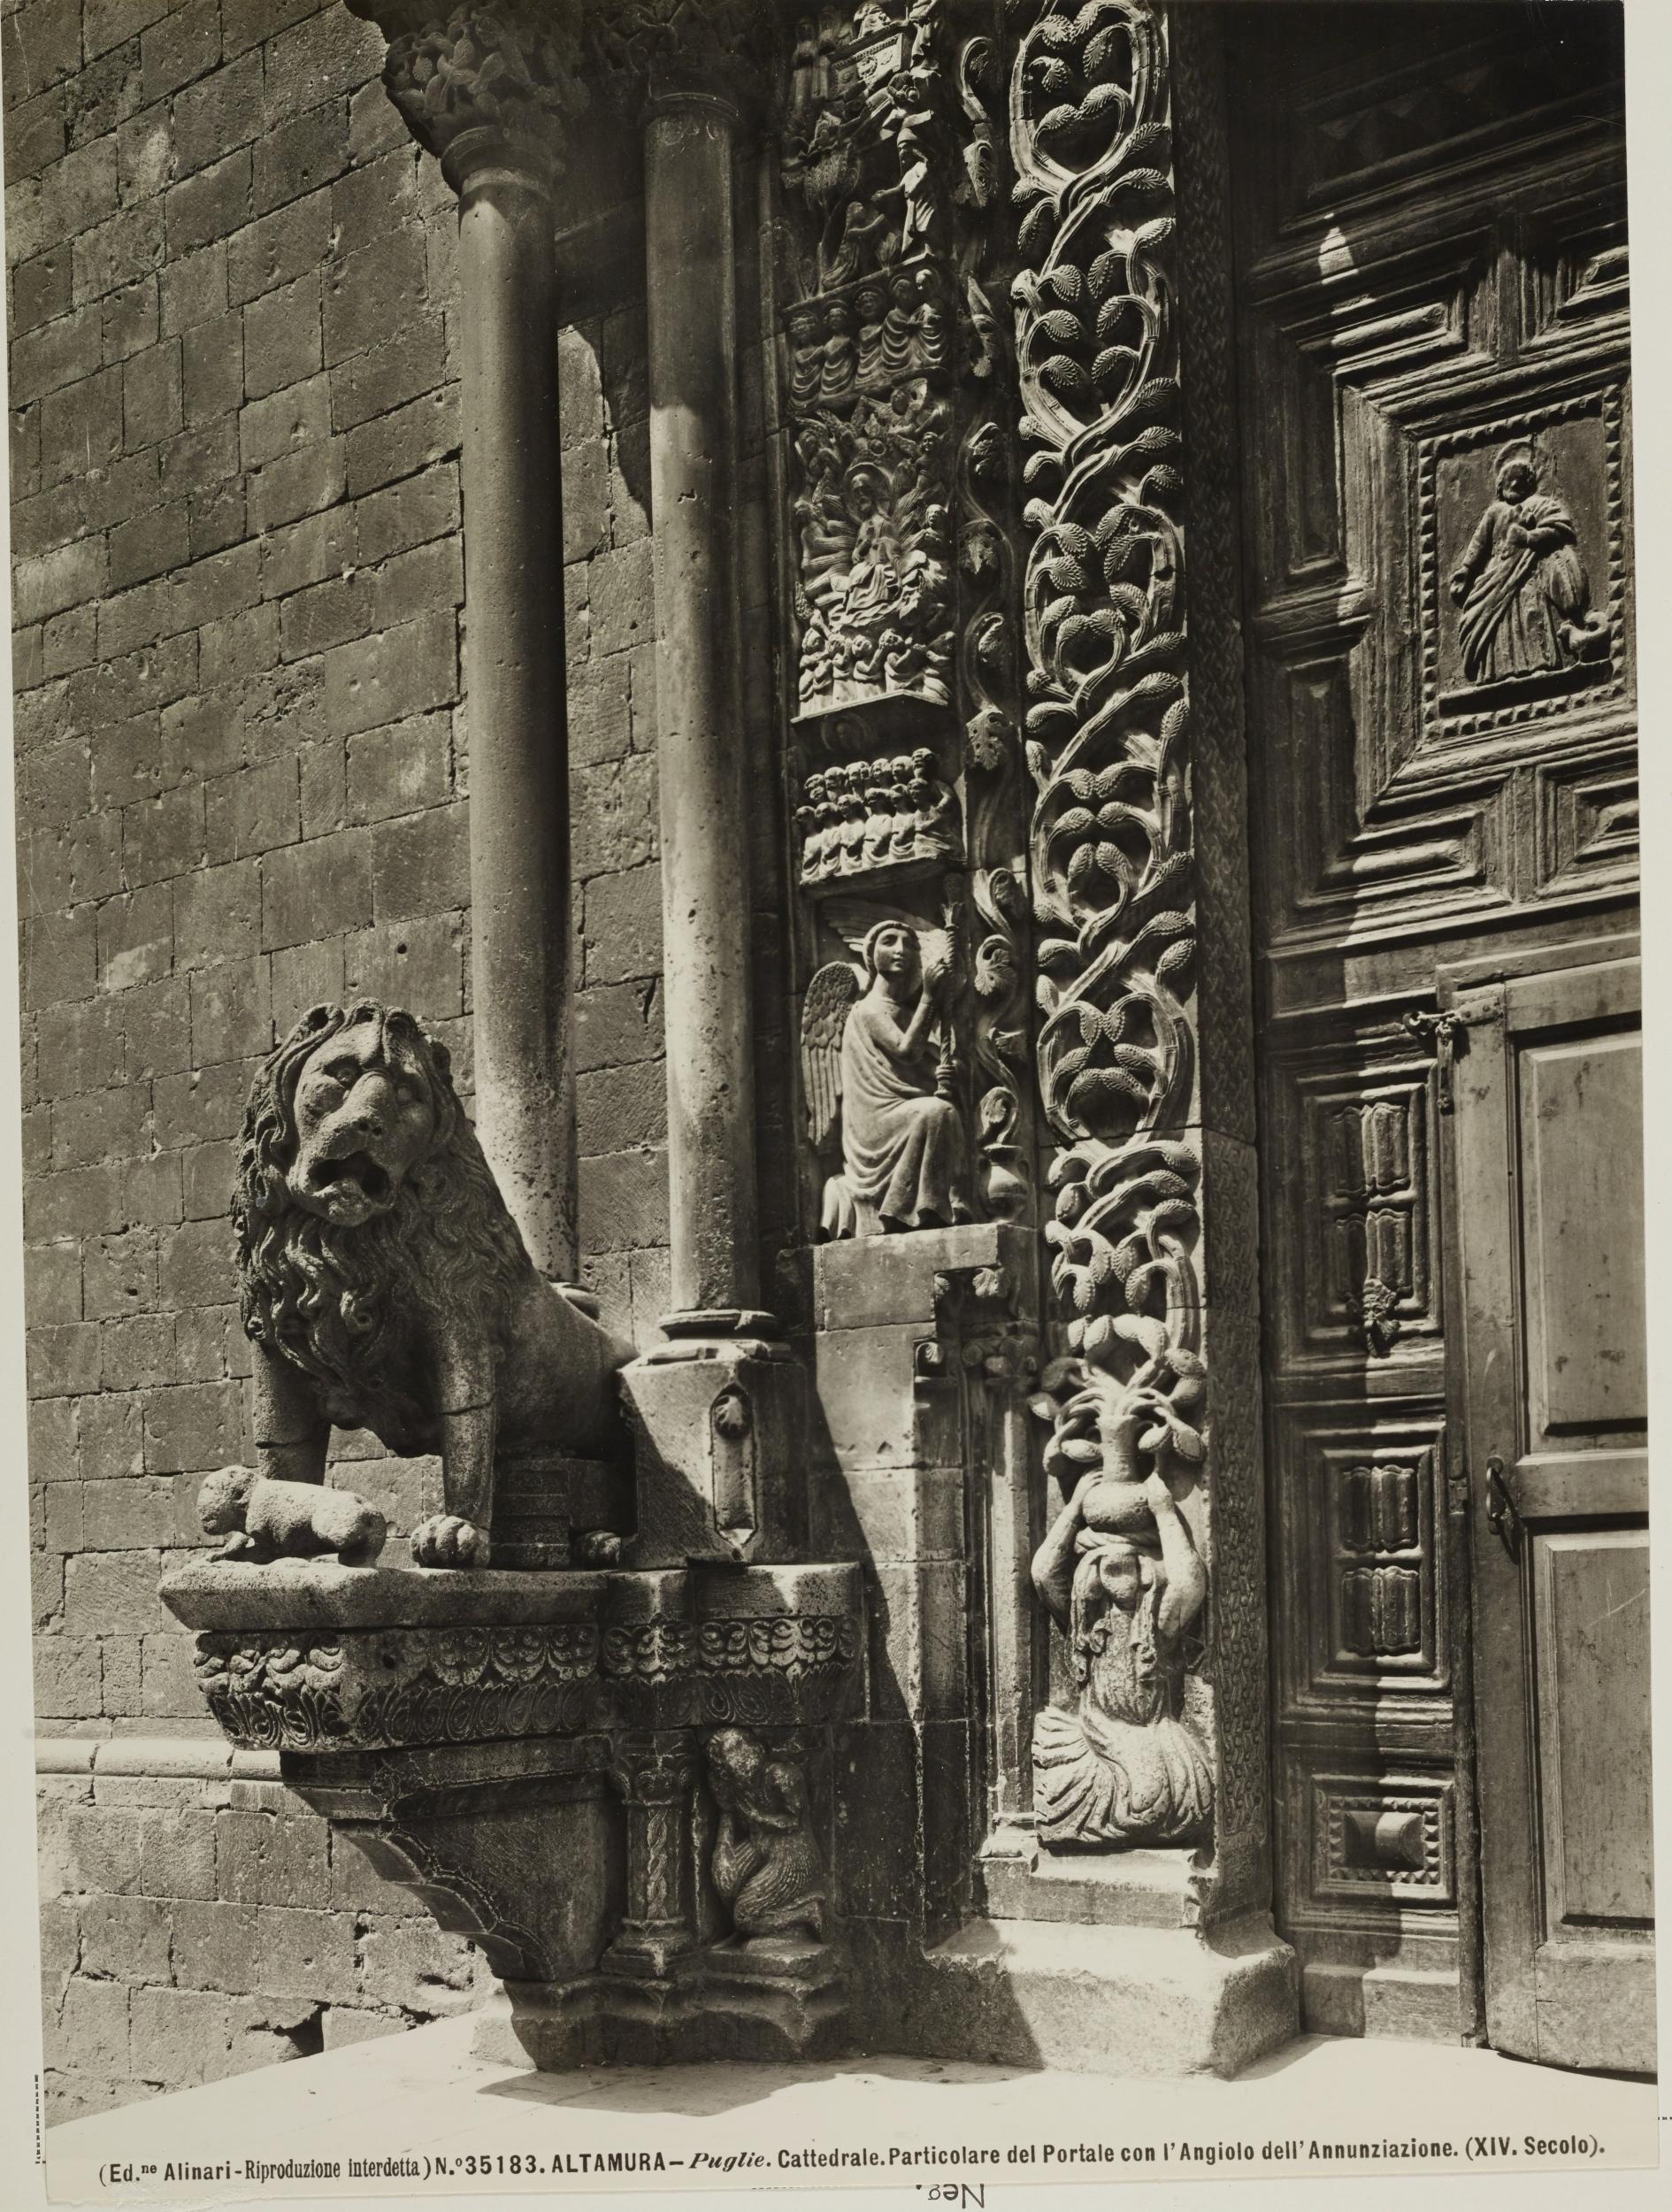 Fratelli Alinari, Altamura - Cattedrale di S. Maria Assunta, portale,particolare, 1951-2000, gelatina ai sali d'argento/carta, MPI130827